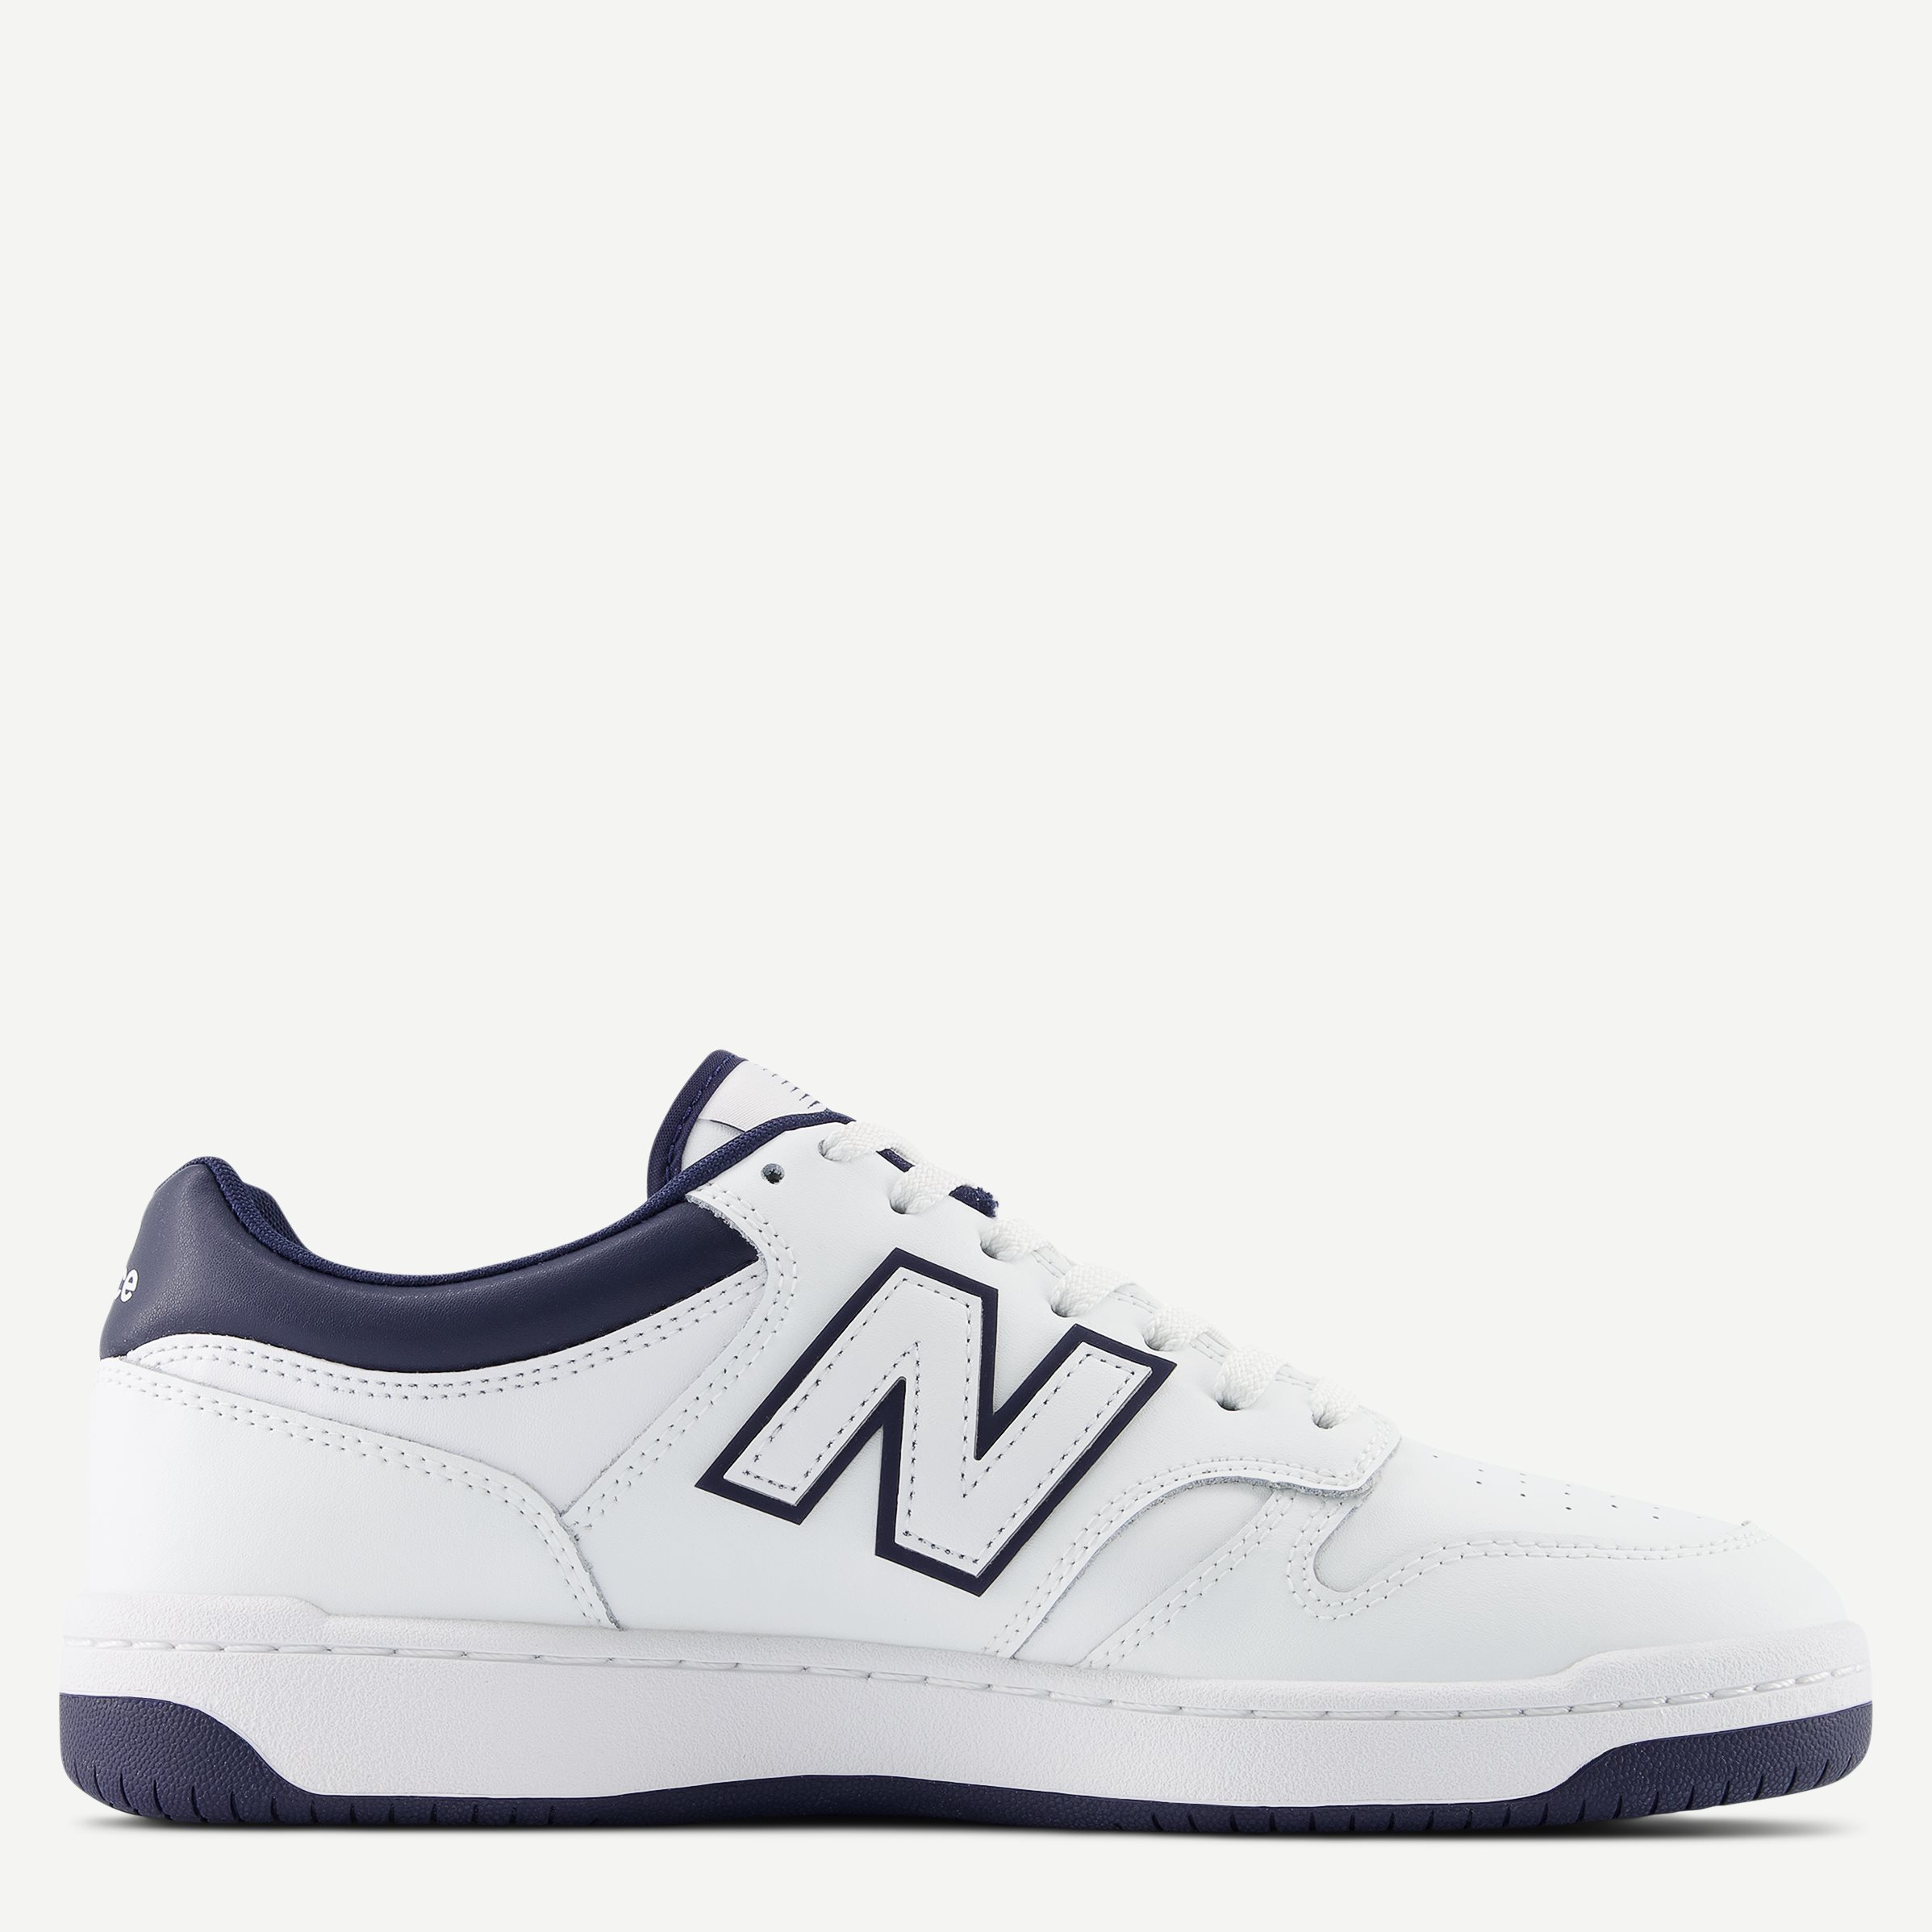 New Balance Shoes BB480 LWN White